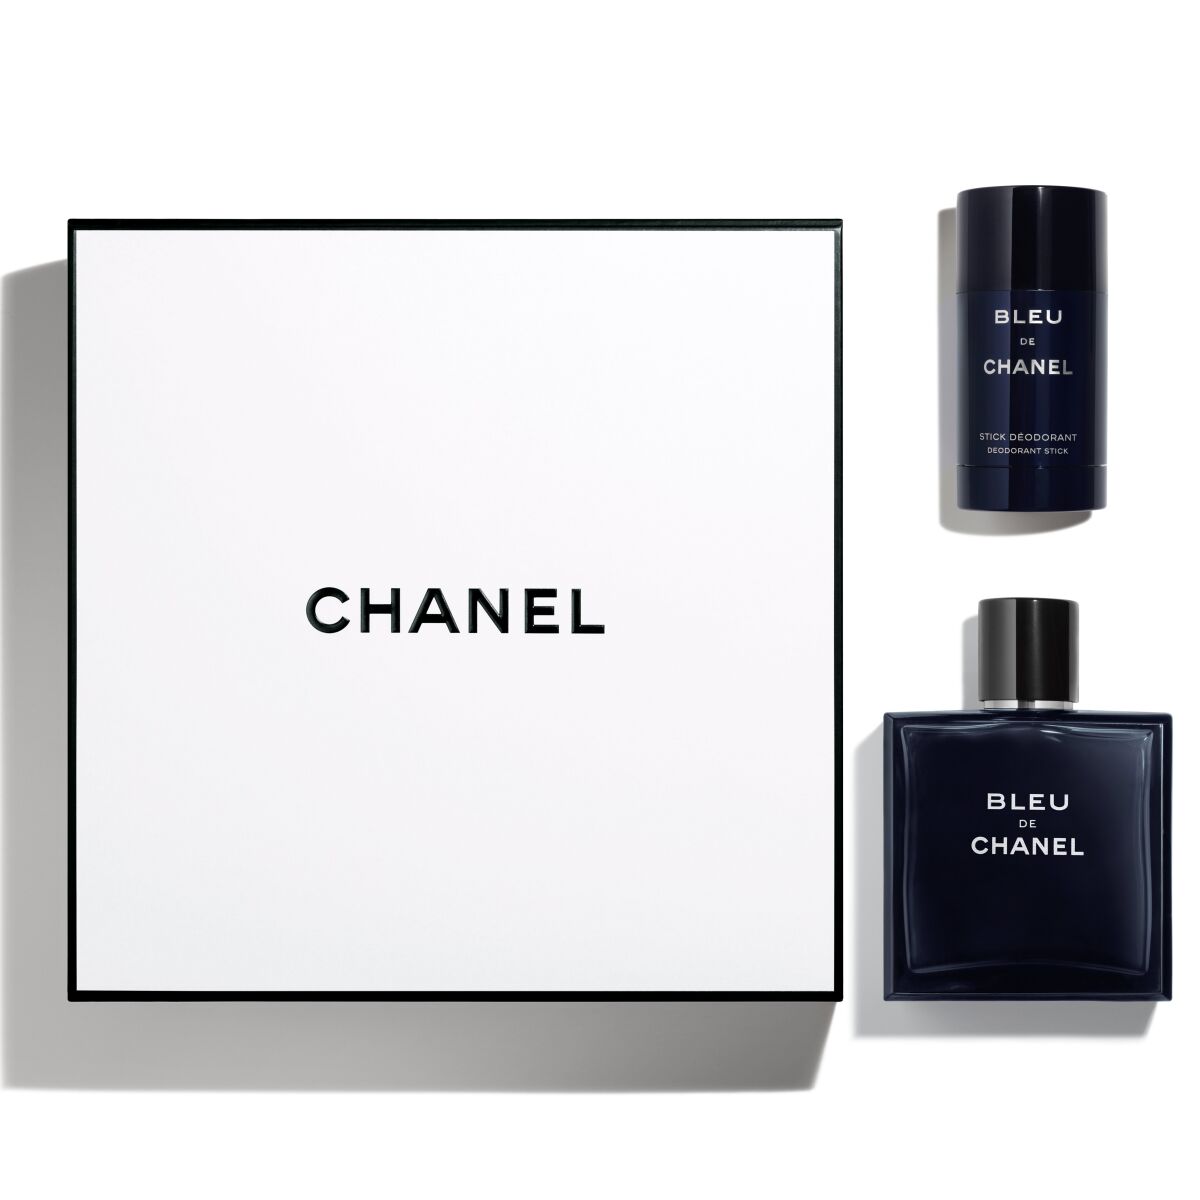 Chanel's Bleu de Chanel fragrance and deodorant stick set